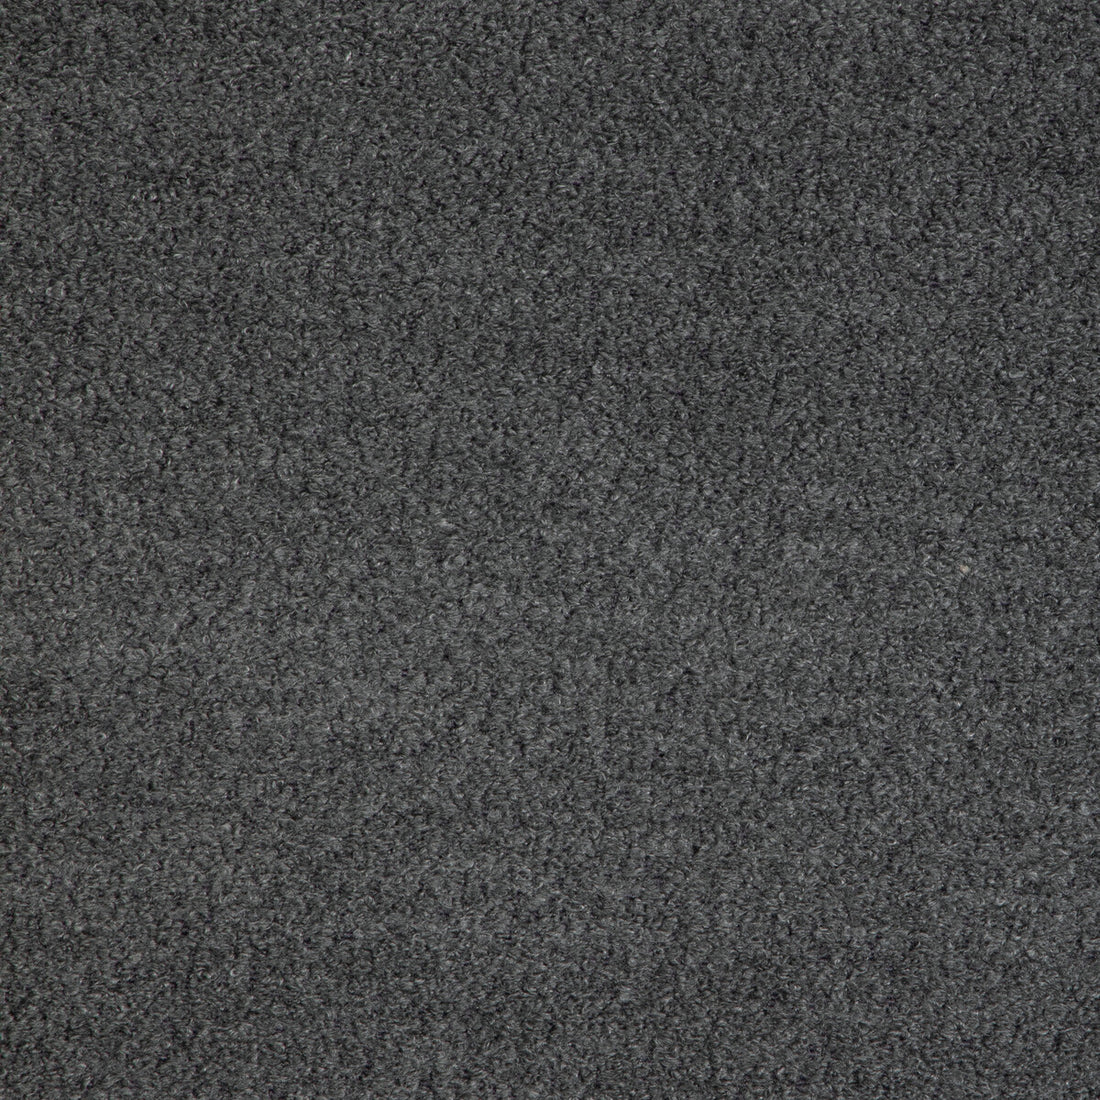 Kravet Smart fabric in 37011-21 color - pattern 37011.21.0 - by Kravet Smart